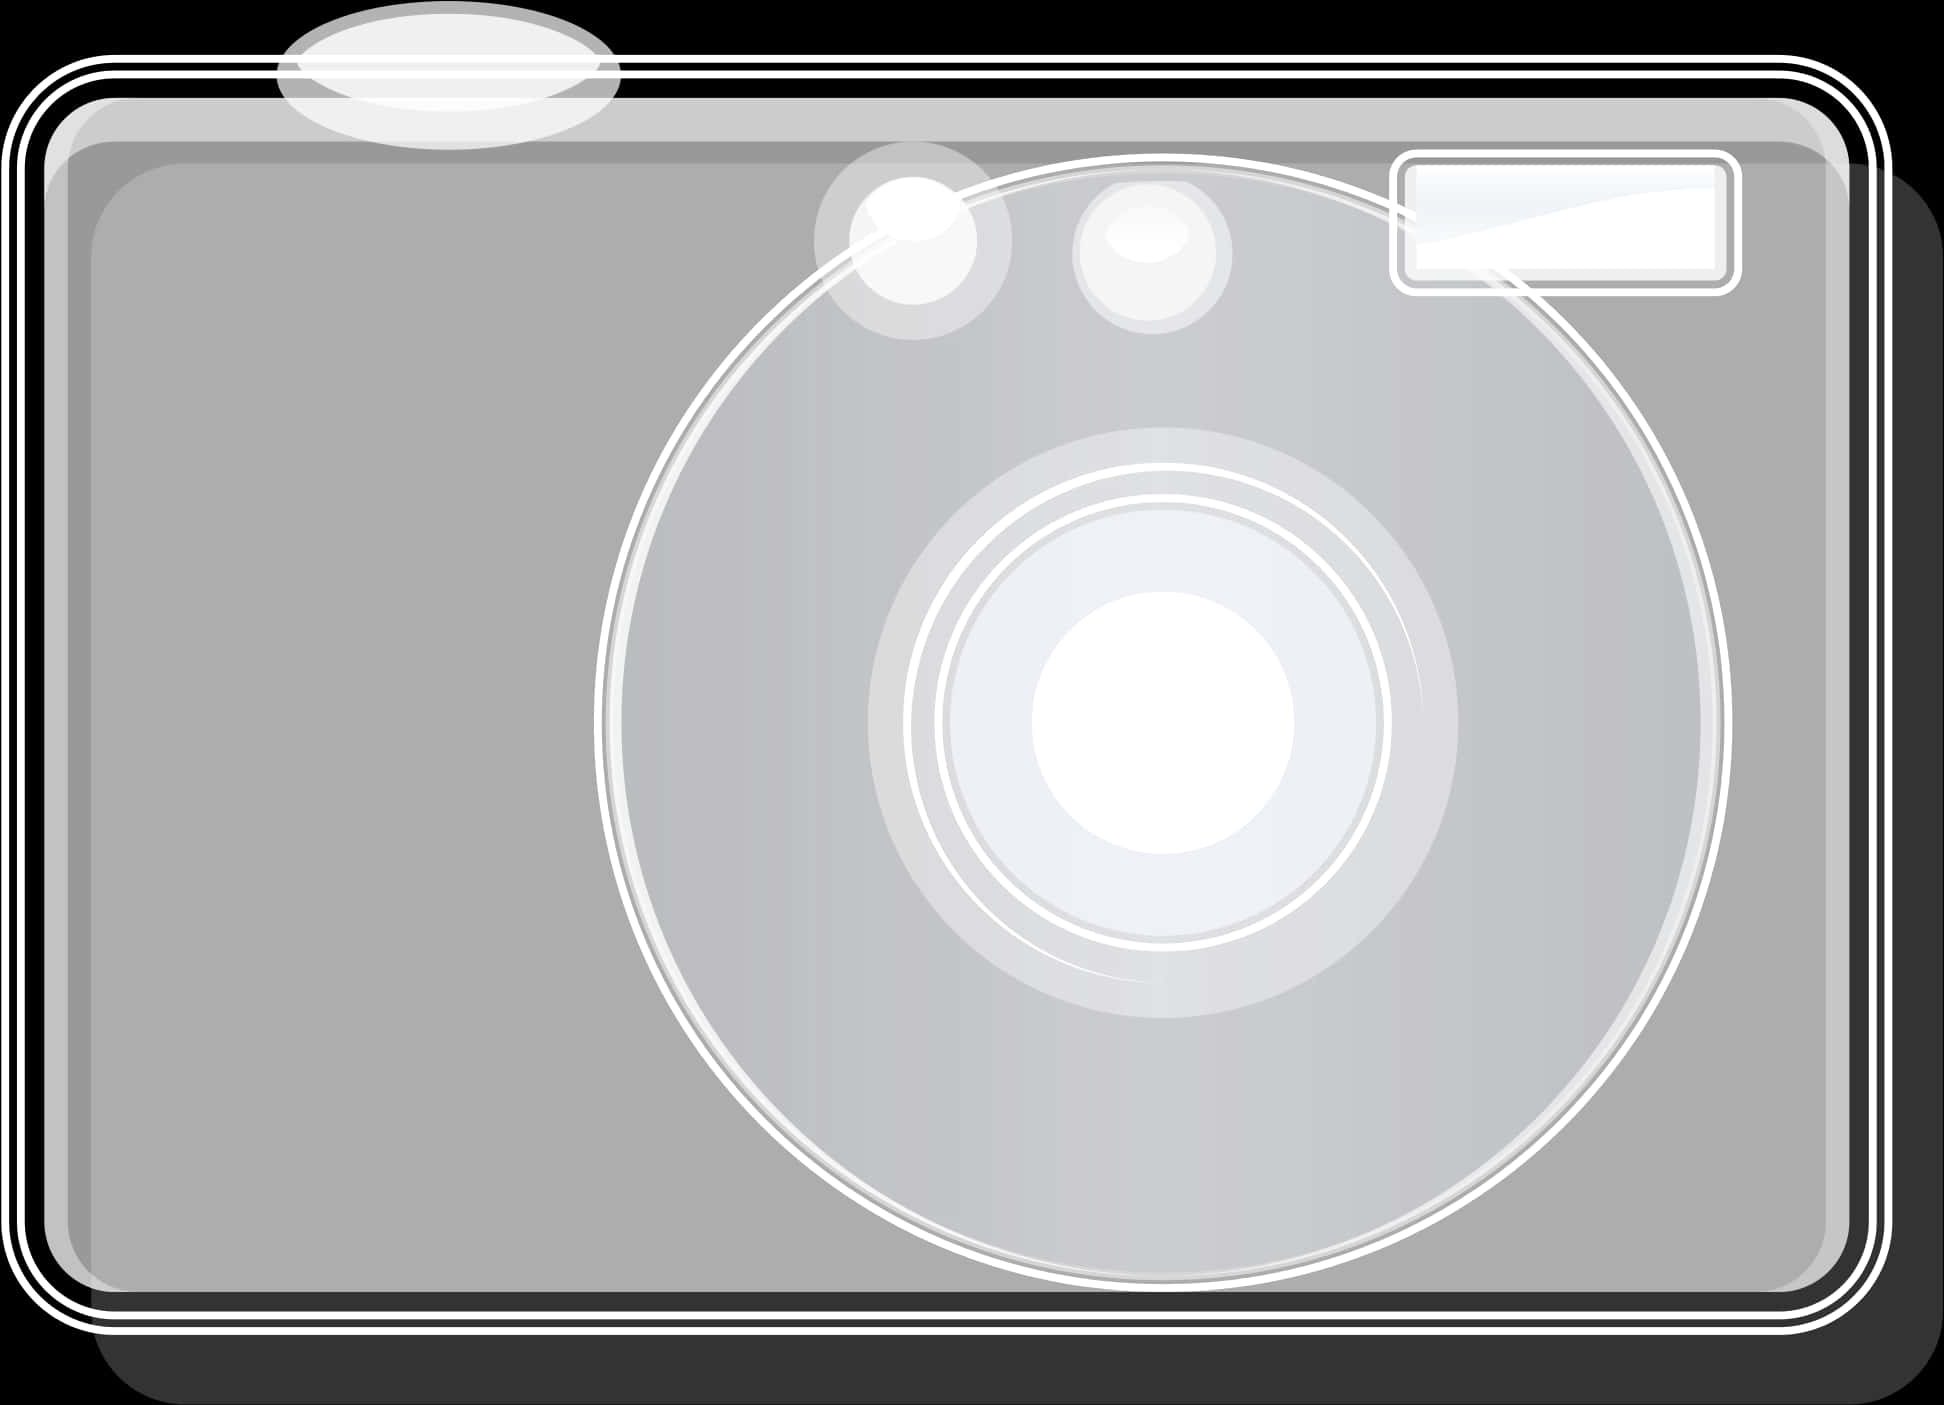 Stylized Camera Icon PNG image